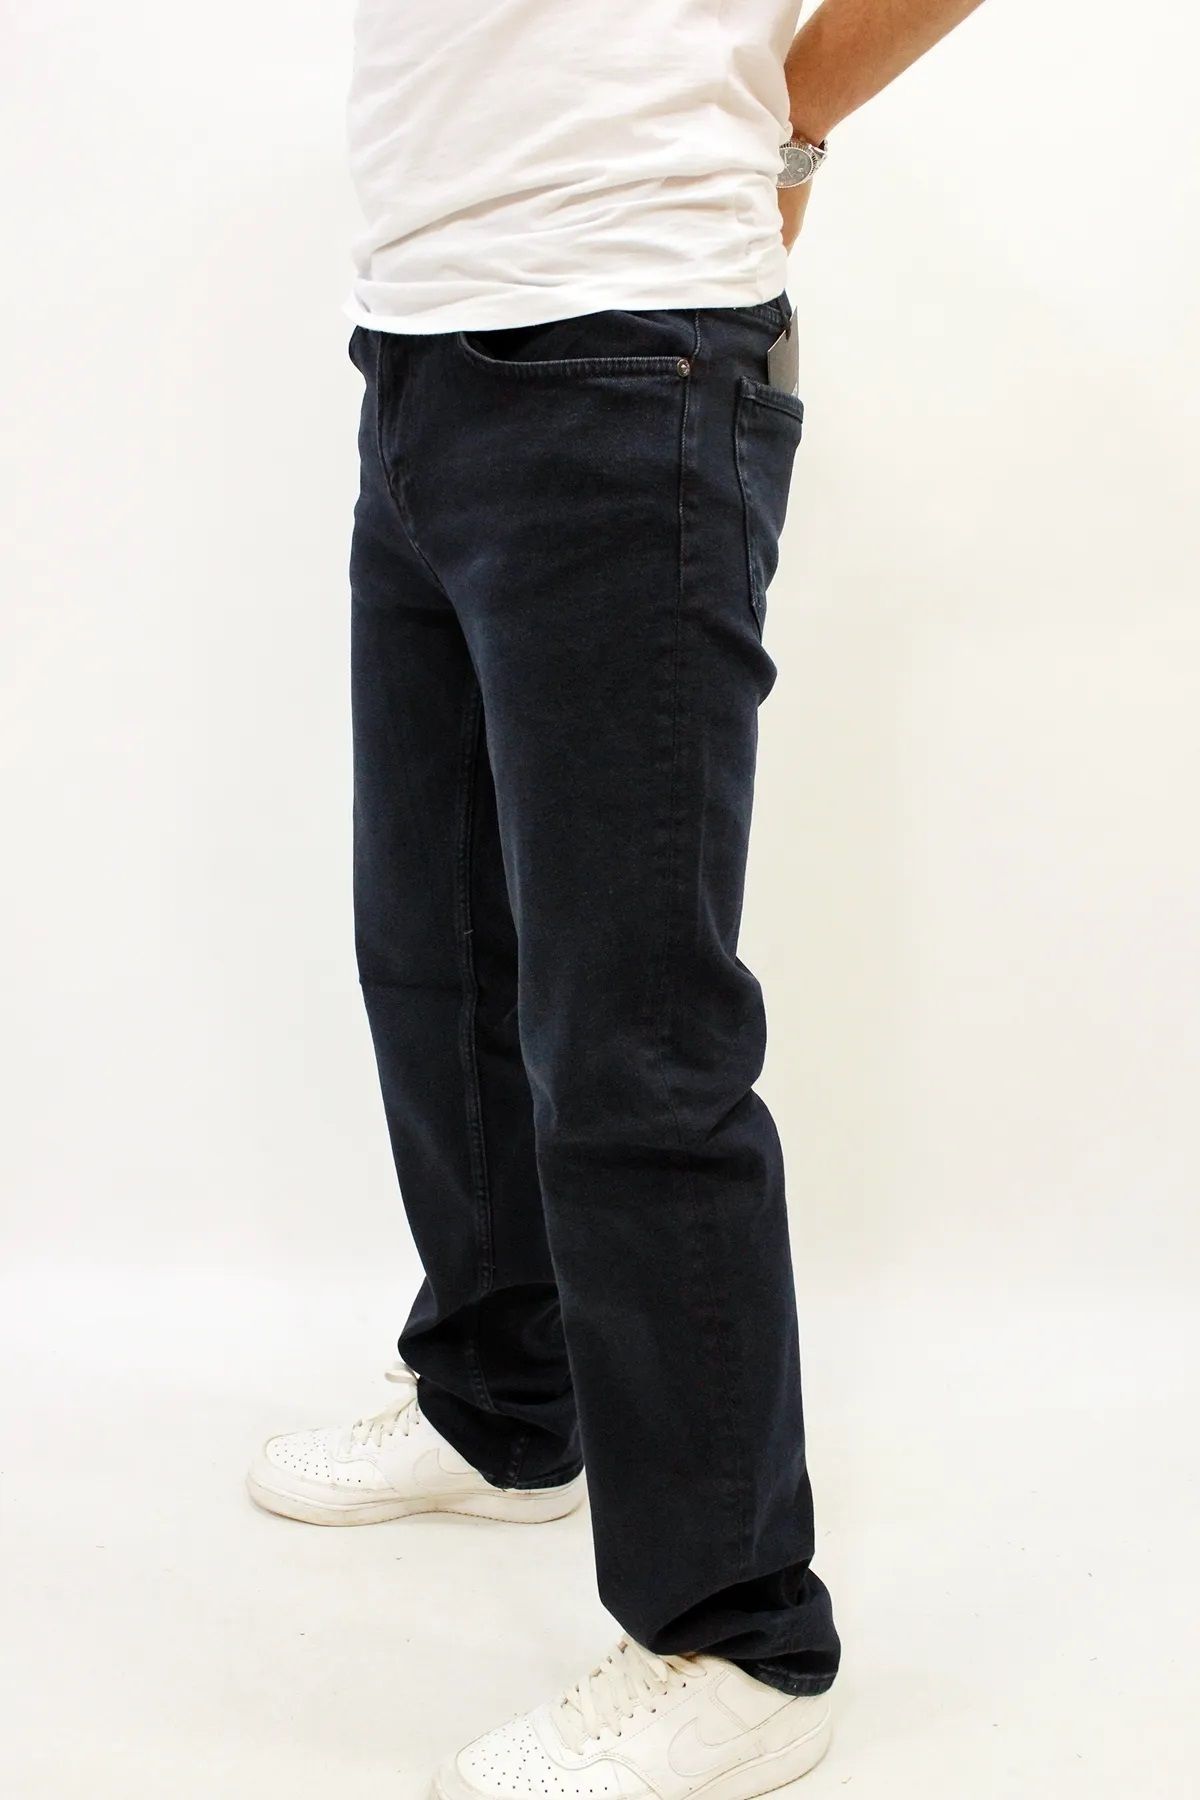 Twister Jeans Erkek Lacivert Rahat Kalıp Düz Paça Kot Pantolon Milano 707-02 Blue Black